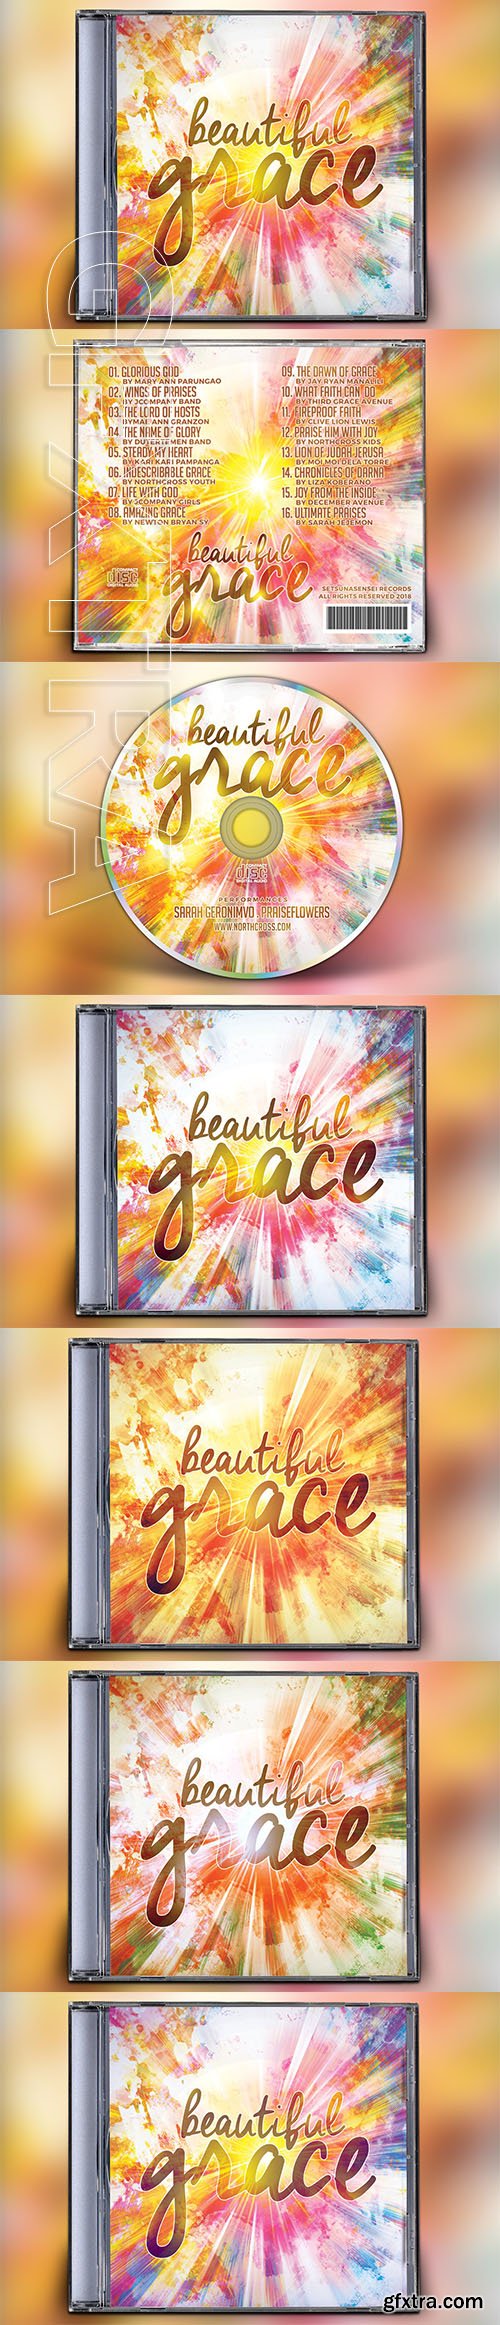 CreativeMarket - Beautiful Grace CD Album Artwork 3165757